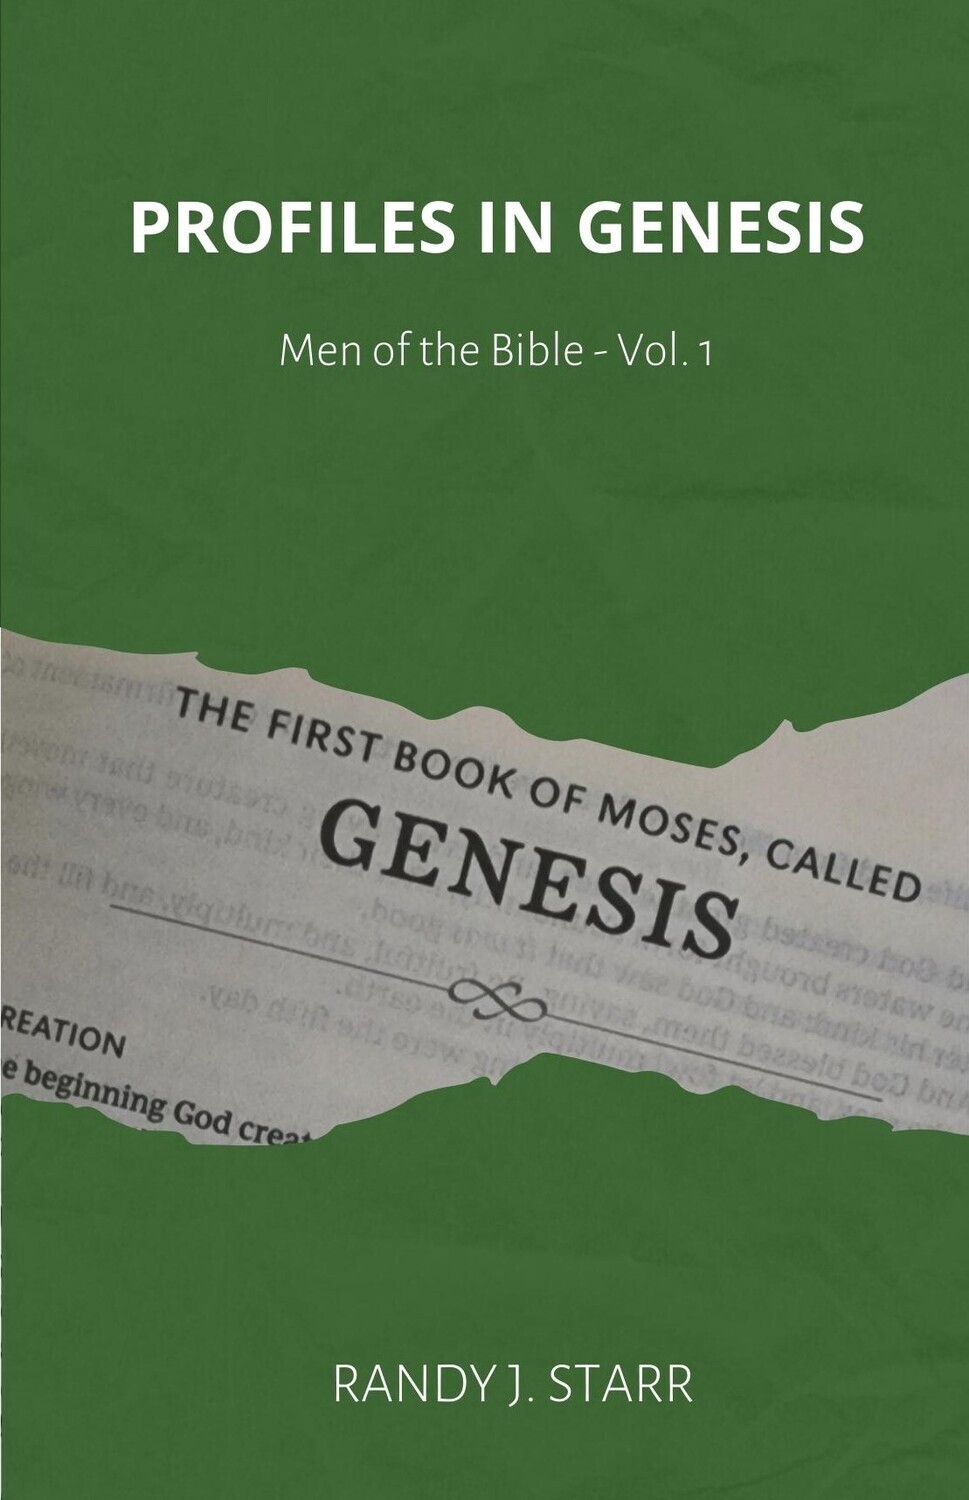 Men of the Bible, vol. 1 - Profiles in Genesis